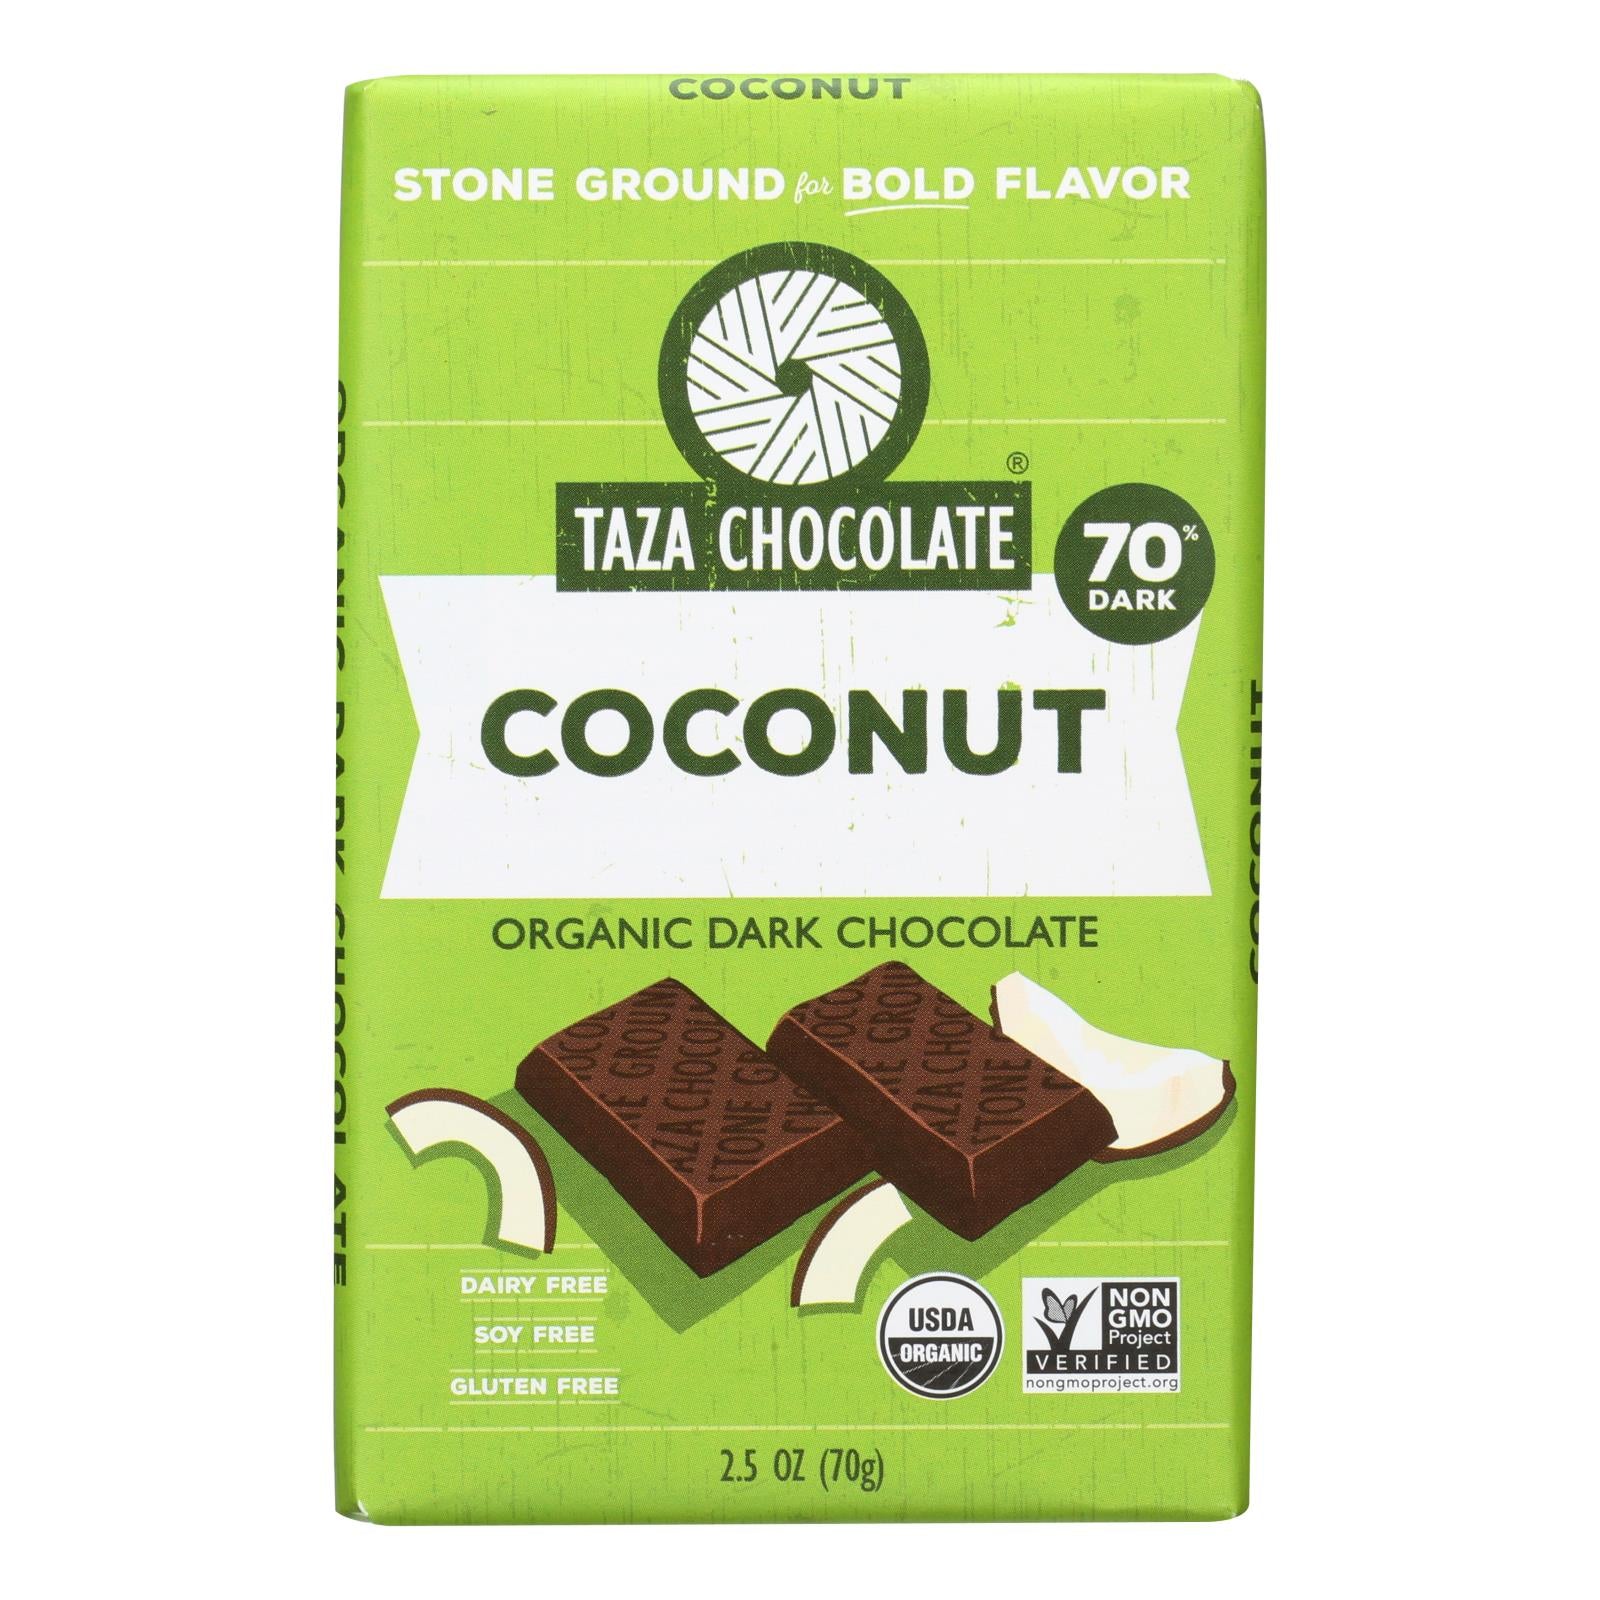 Taza Chocolate Stone Ground Organic Dark Chocolate Bar - Coco Besos Coconut - Case of 10 - 2.5 oz.